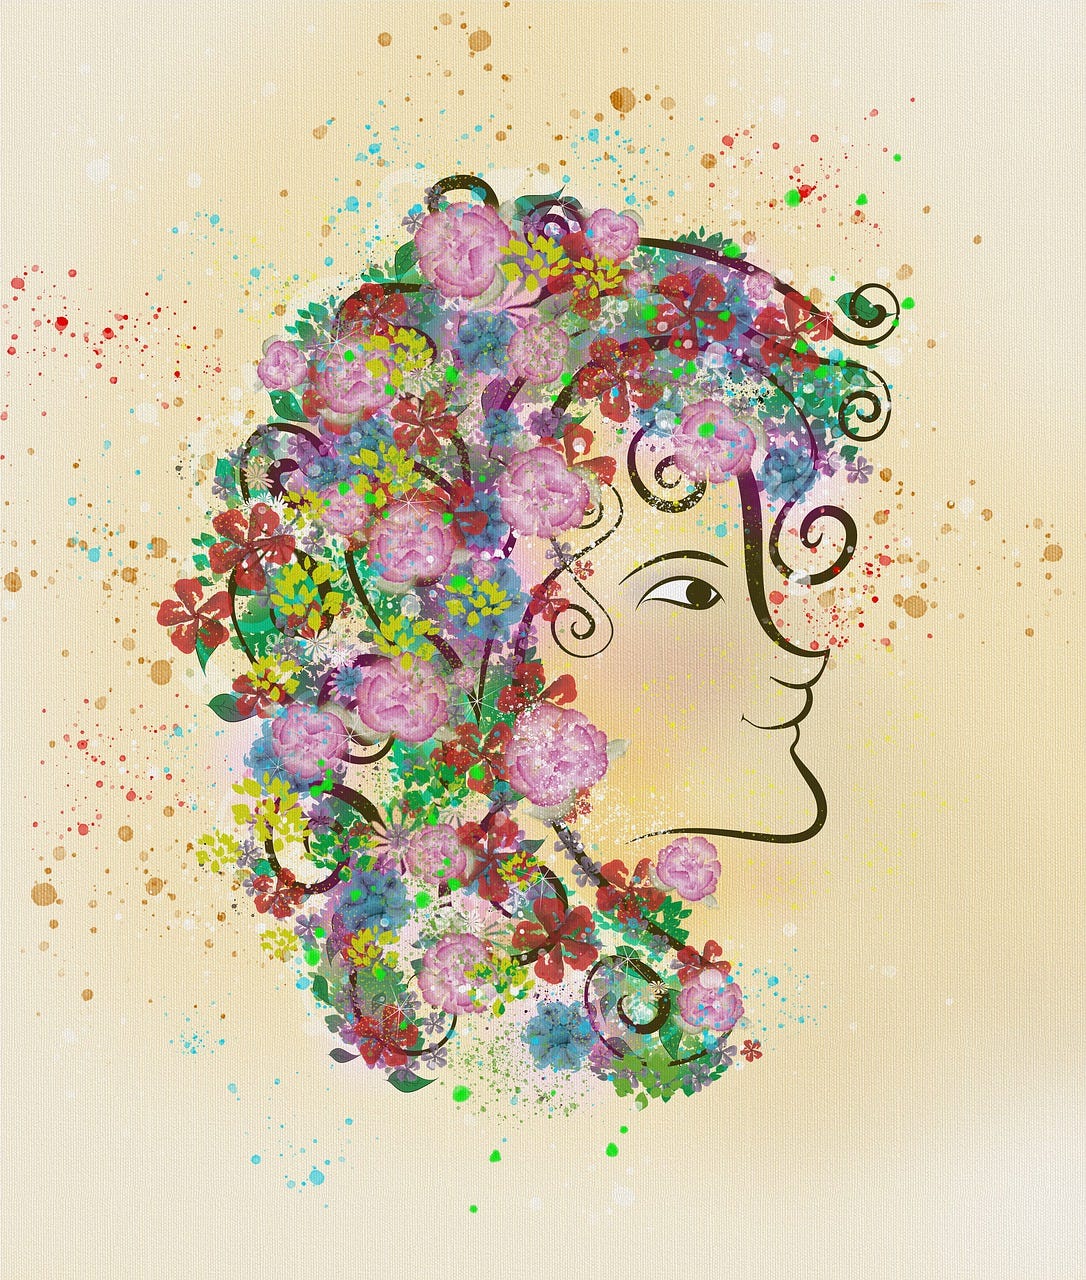 Mother Day Women Art - Free image on Pixabay